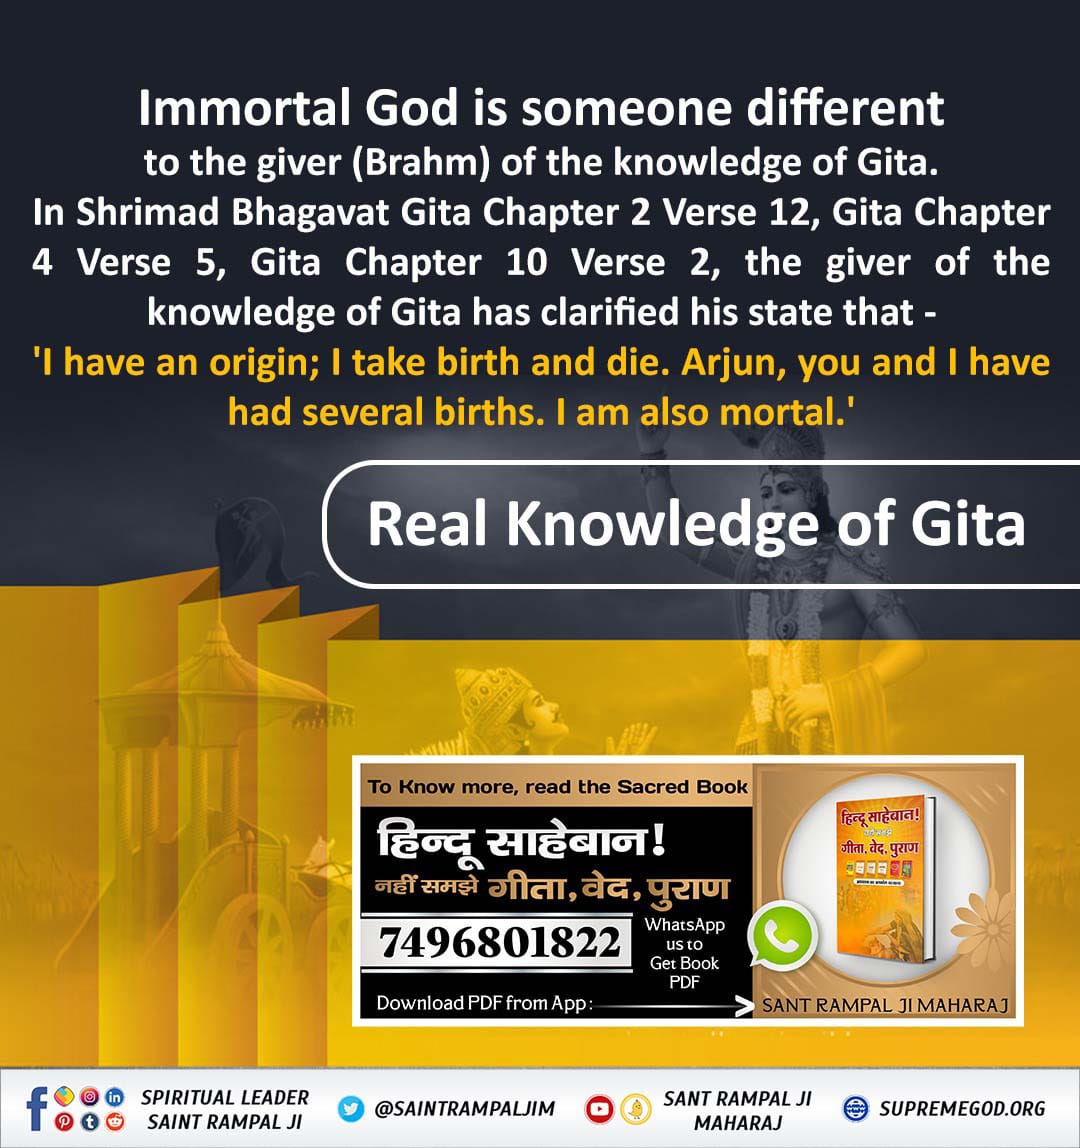 #Gita_Is_Divine_Knowledge

We Should Follow It